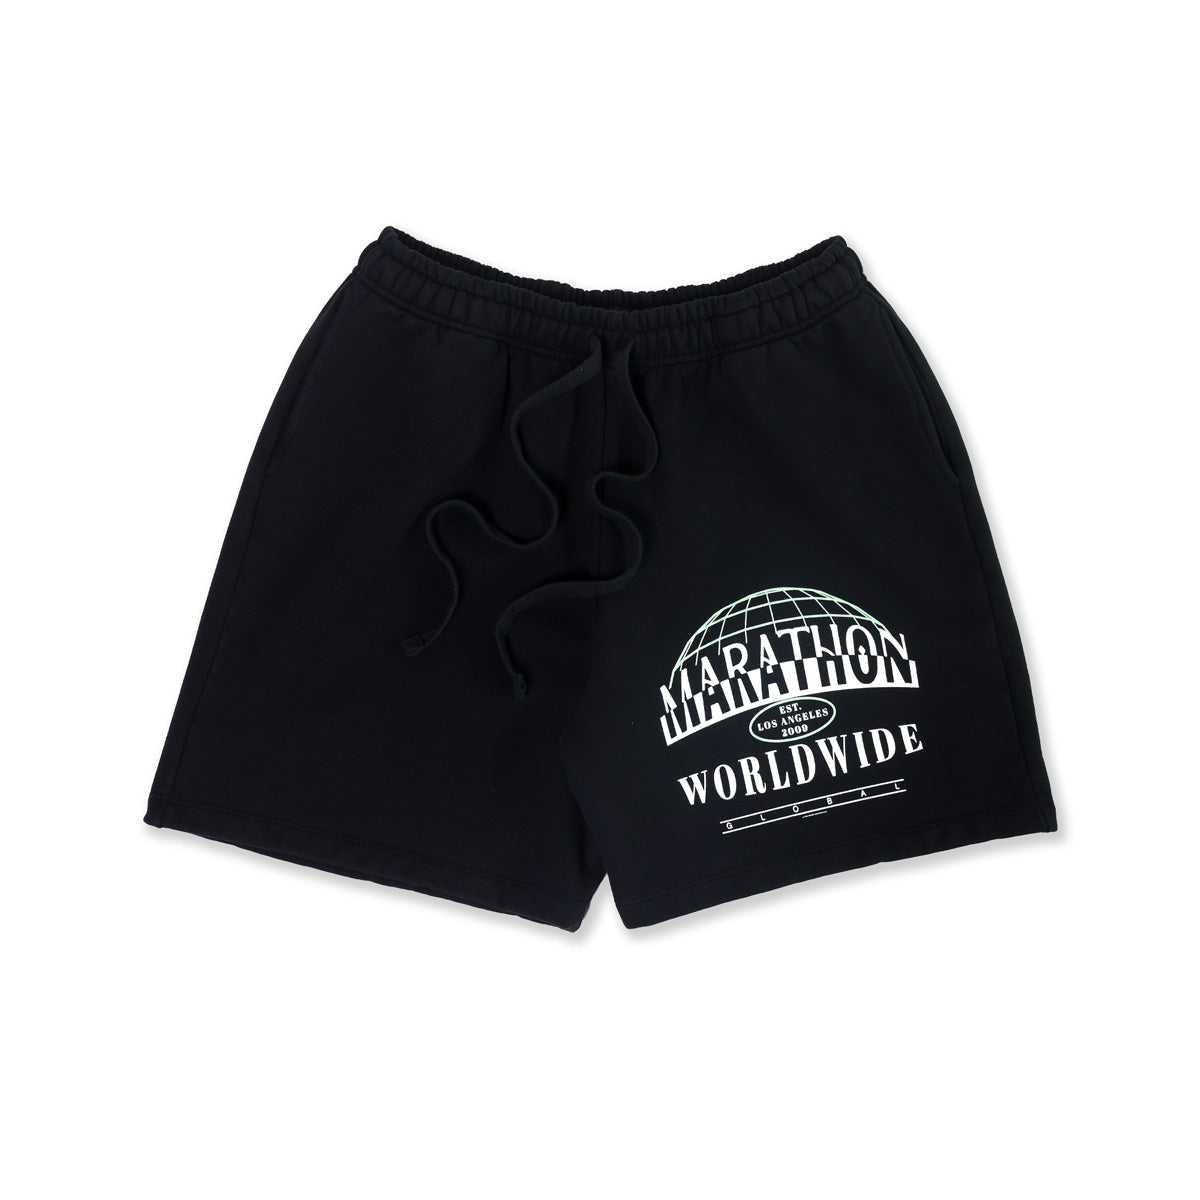 Marathon Worldwide Shorts - Black - Front